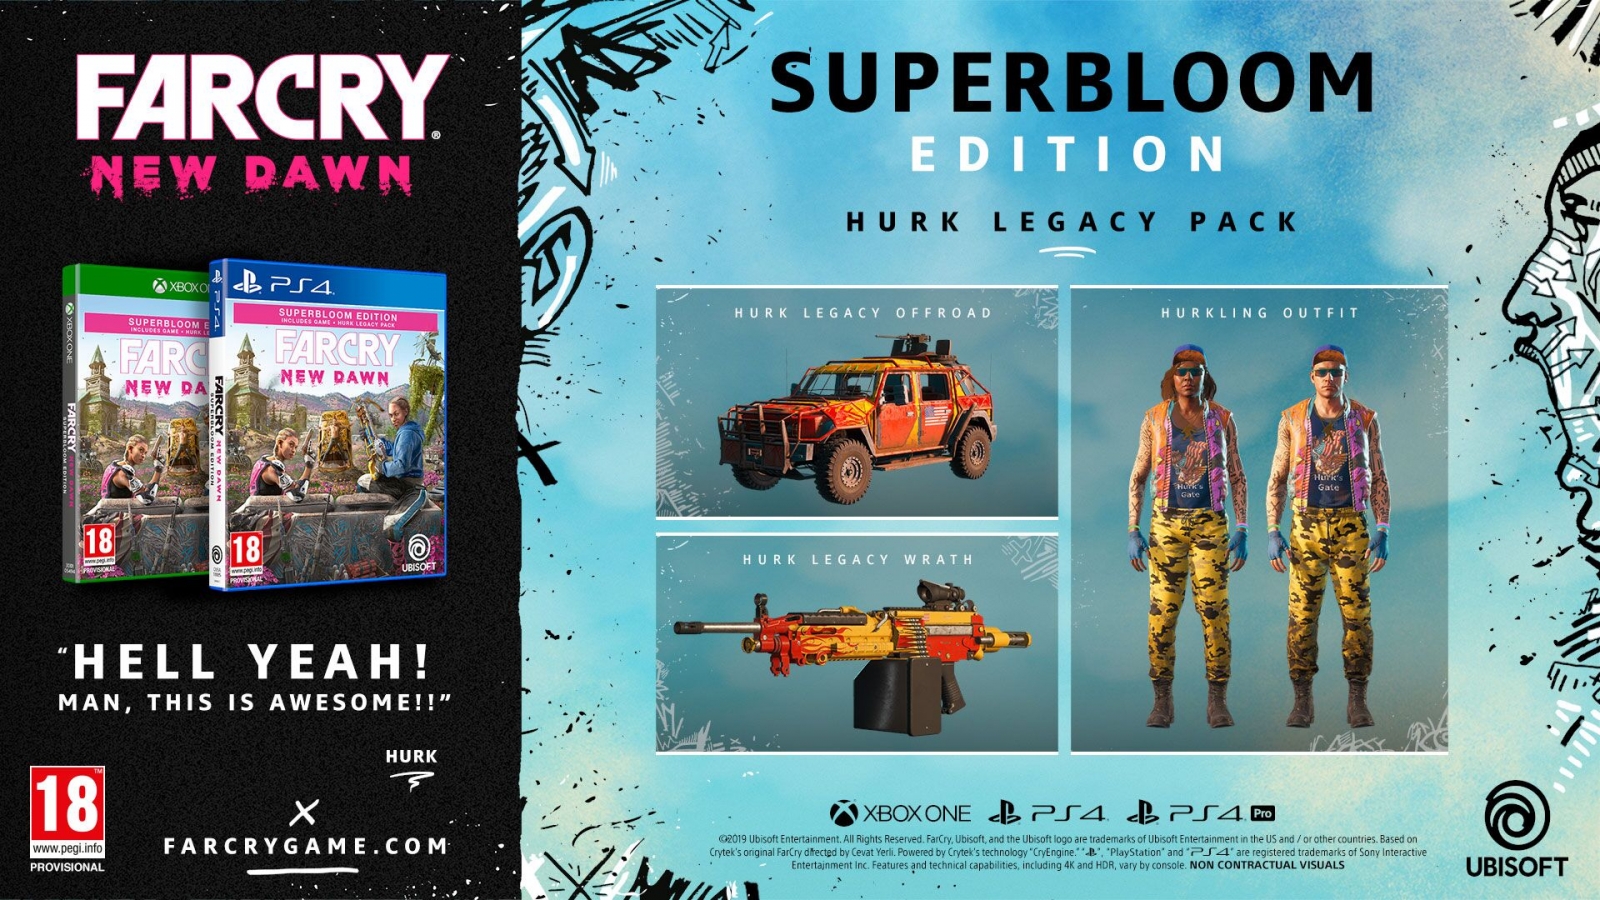 PS4 Far Cry New Dawn Superbloom Edition